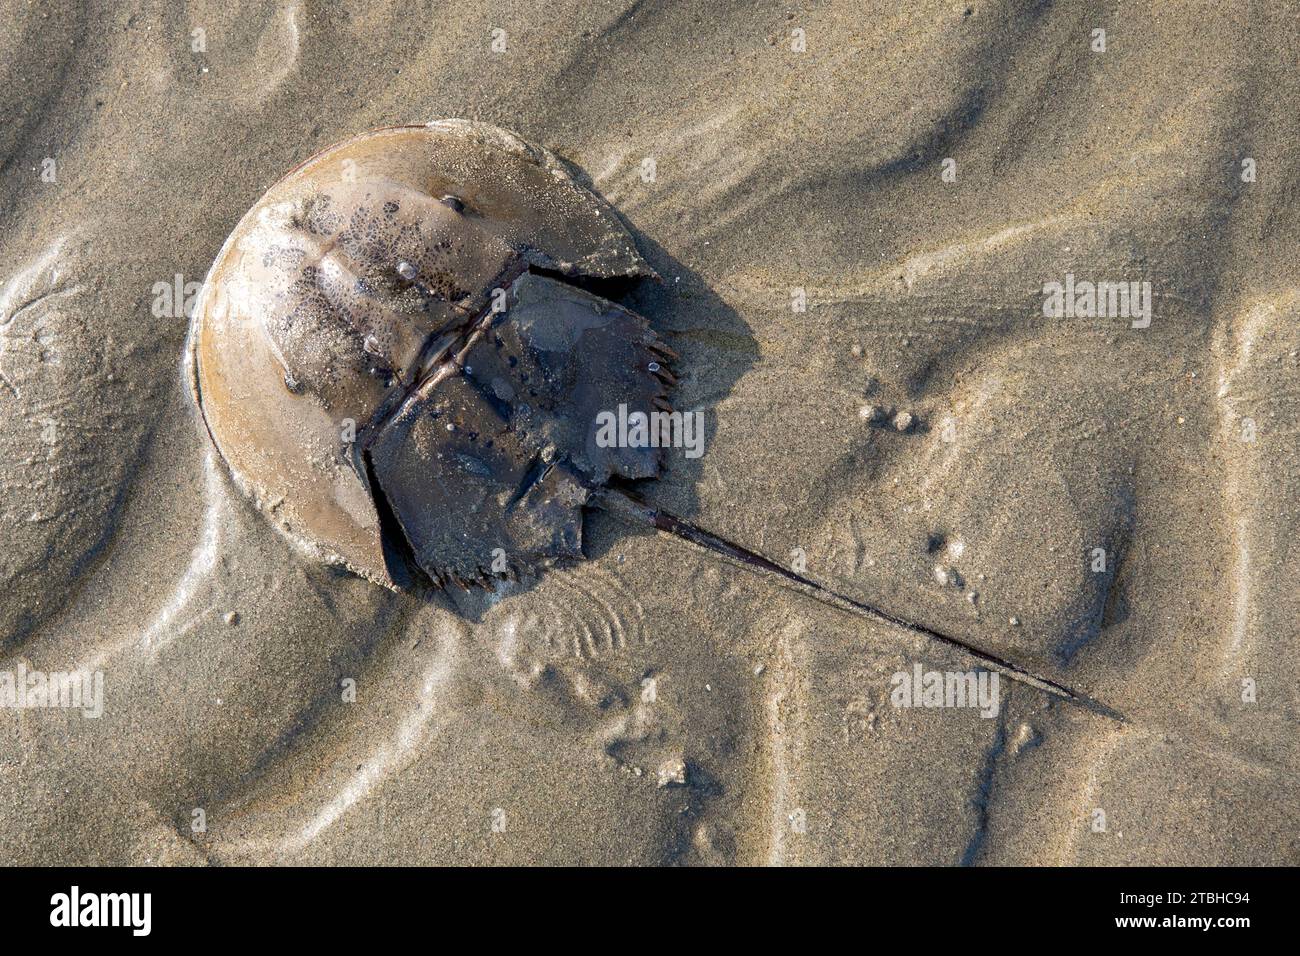 Animals, Other animals, Arrowhead crabs, Mangrove Horseshoe Crab (Carcinoscorpius rotundicauda) adult, upturned on beach, cox bazar, bangladesh. Stock Photo